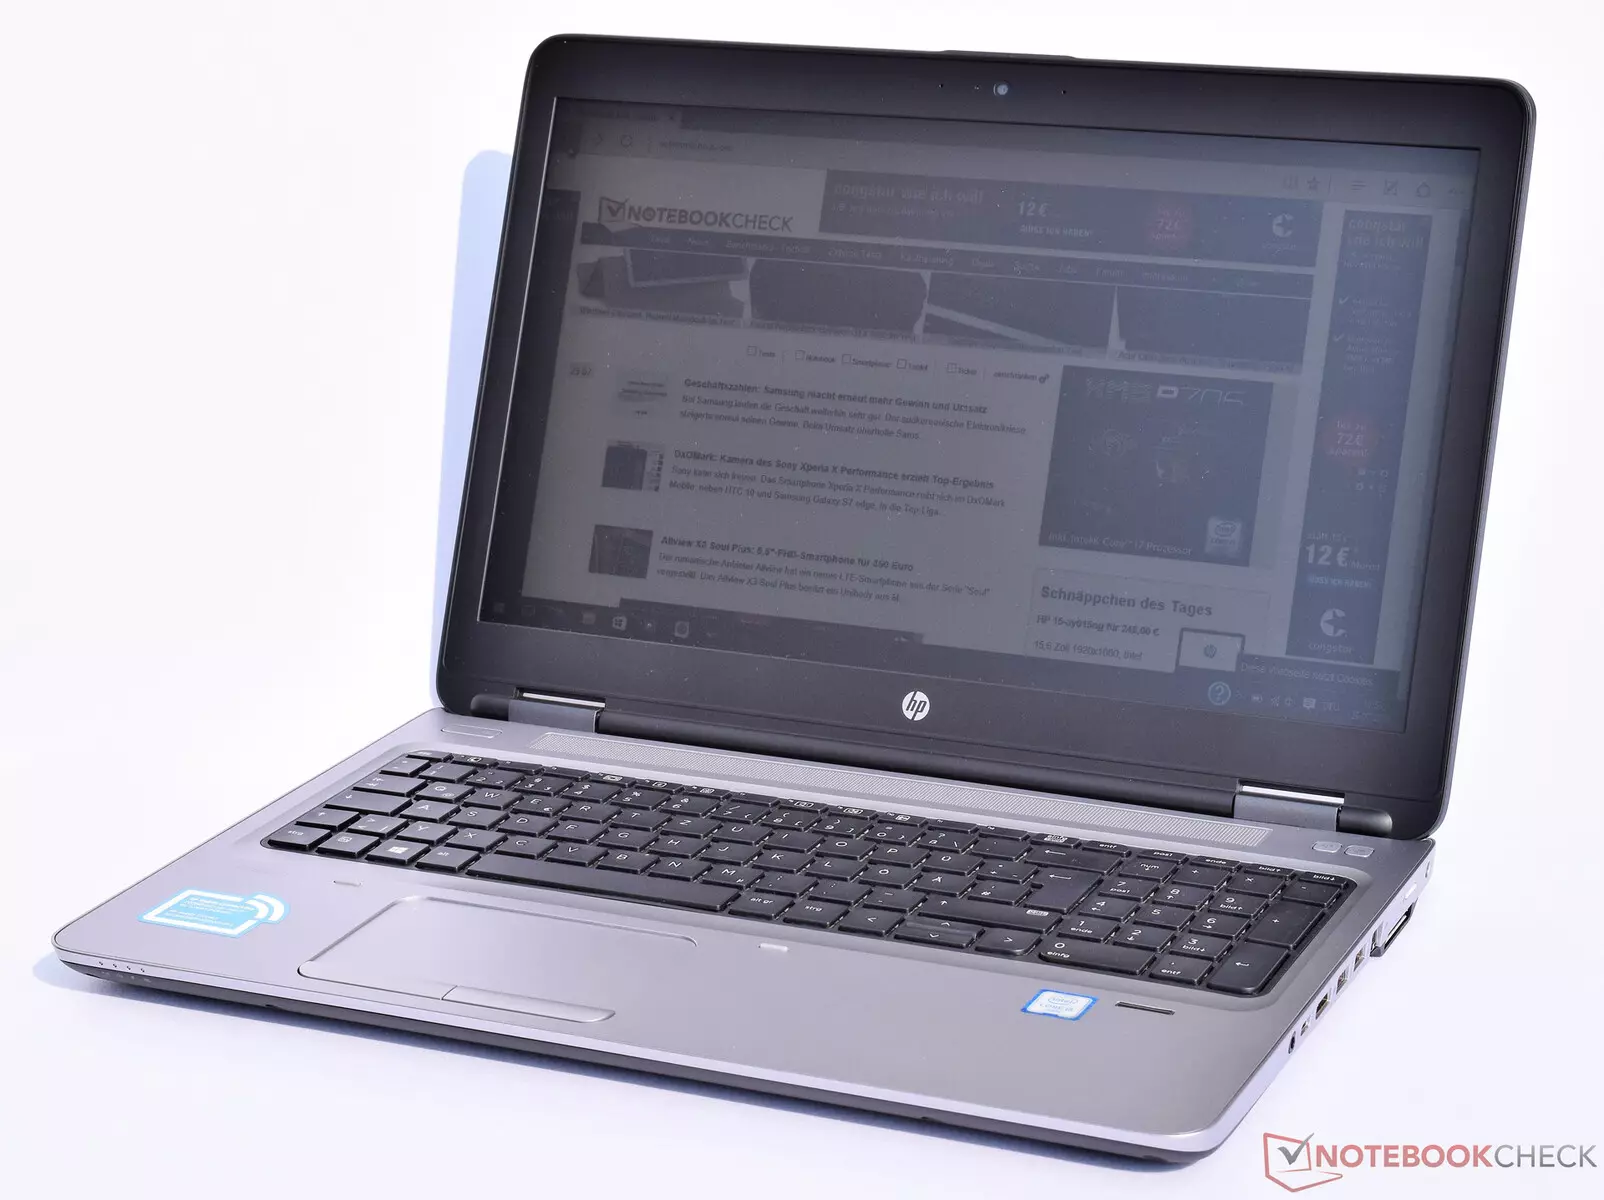 HP ProBook 650 G2 V1A44ET